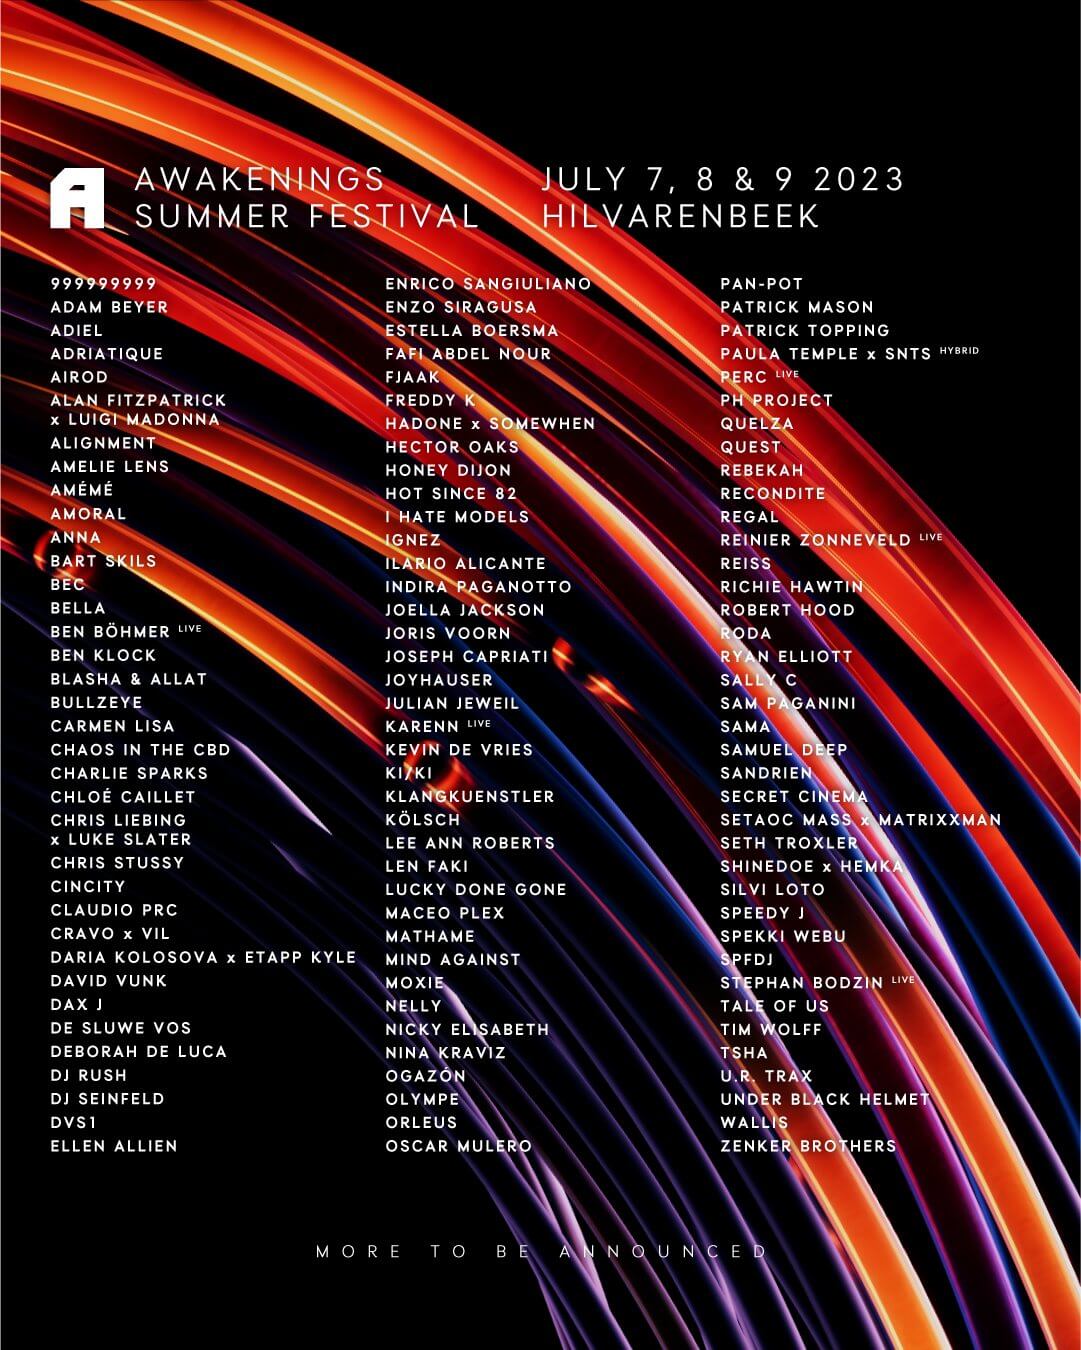 Awakenings unveils lineup for 3day weekend Summer Festival Jordan